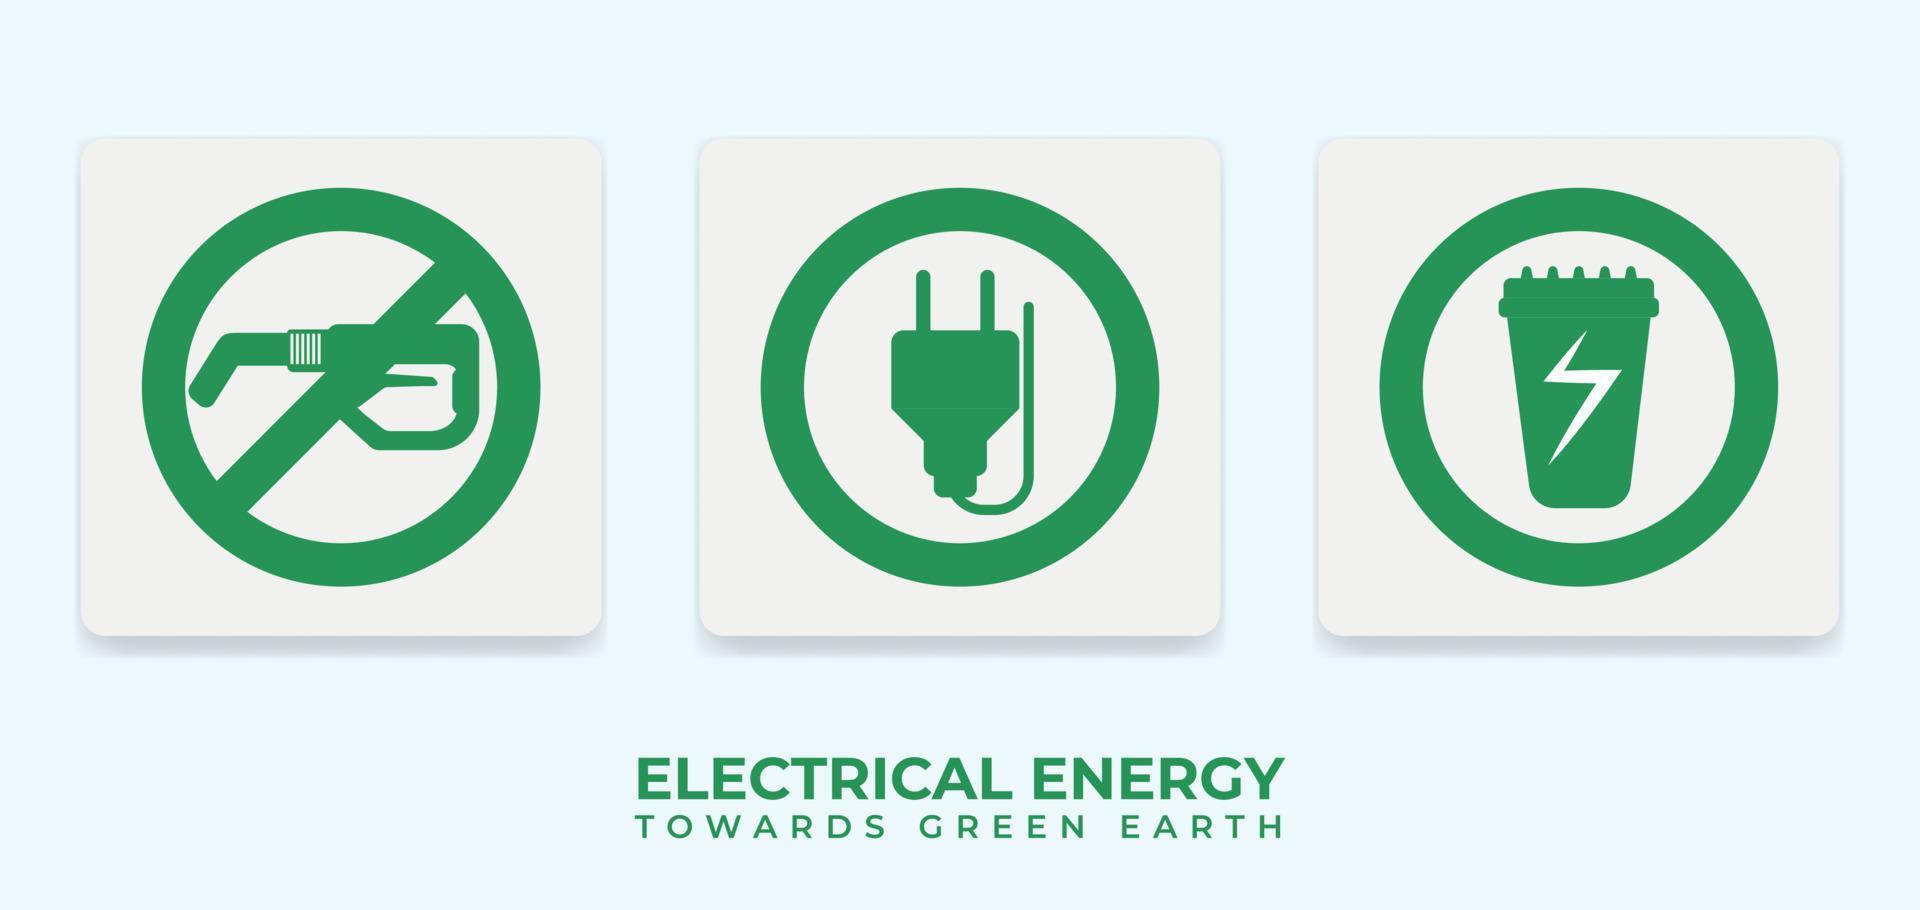 electric energy recharging instructions logo vector